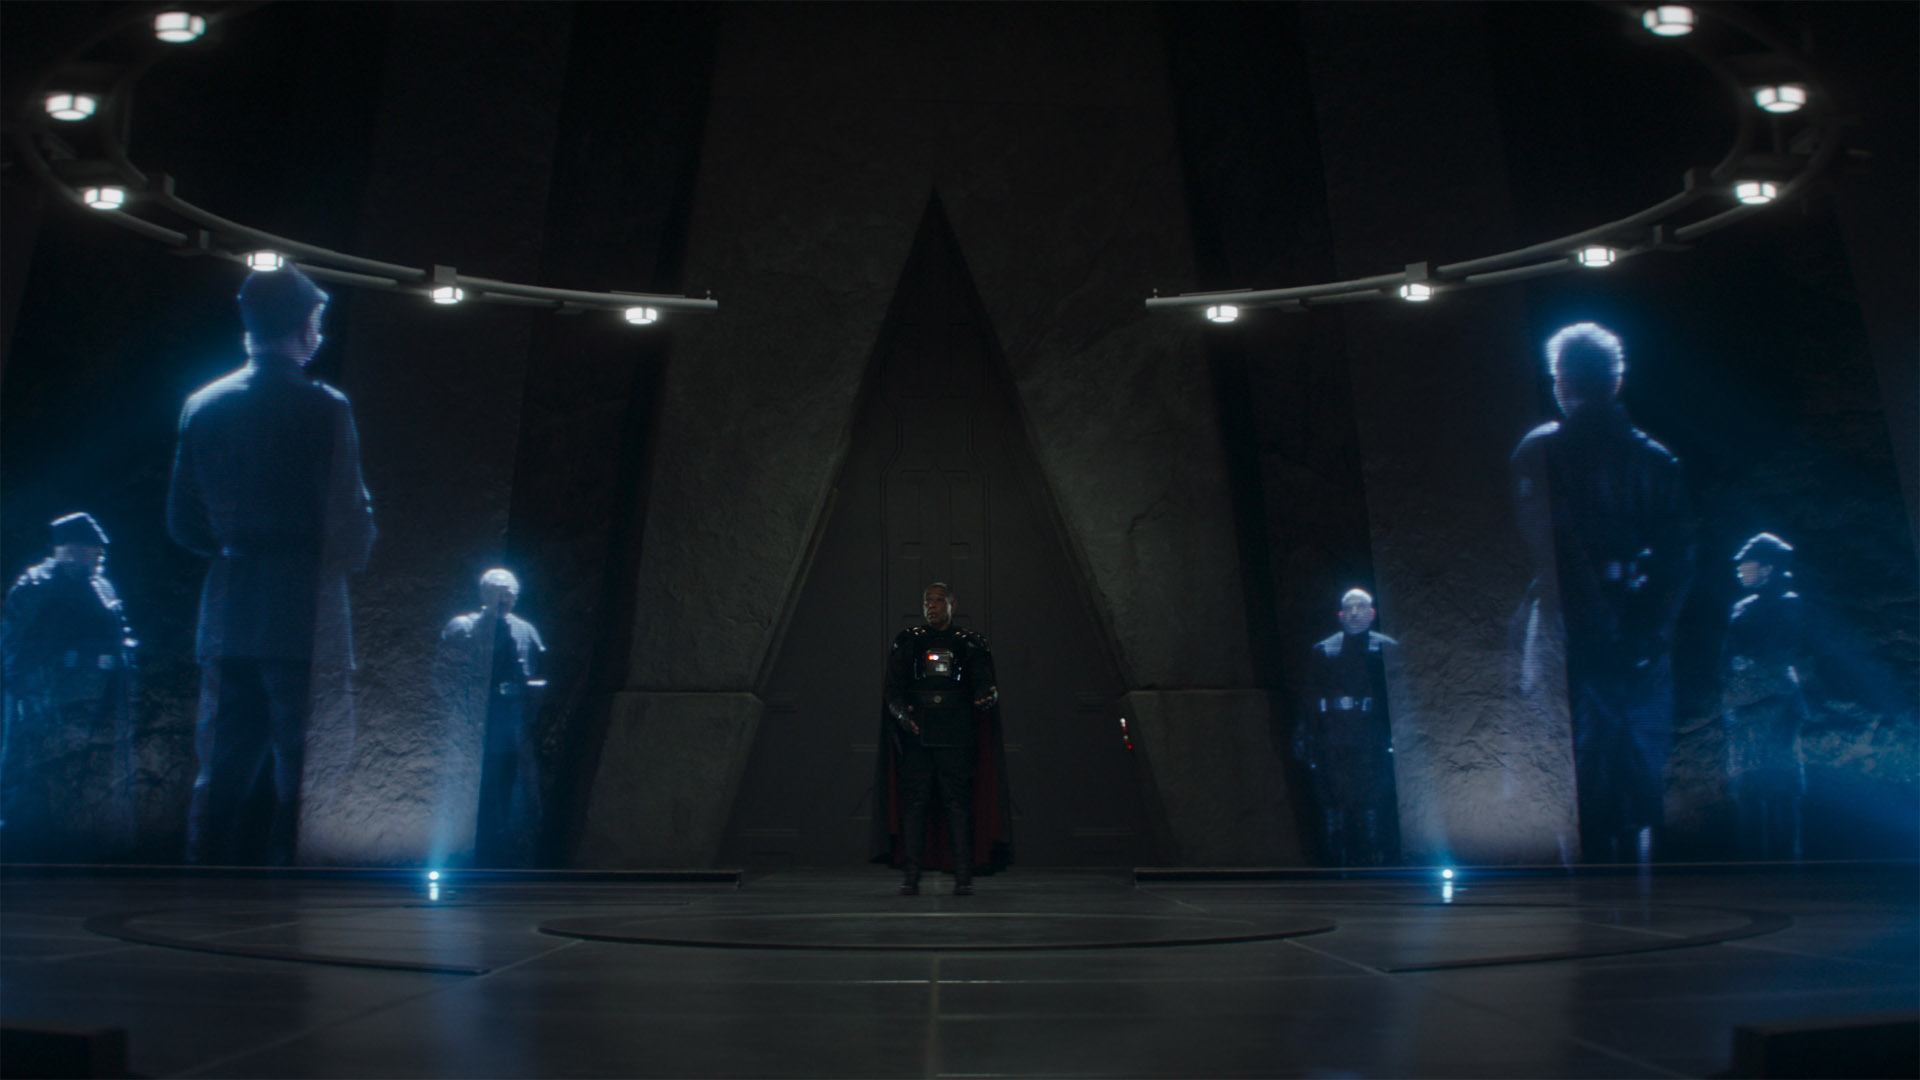 The Imperial Shadow Council meet in The Mandalorian season 3